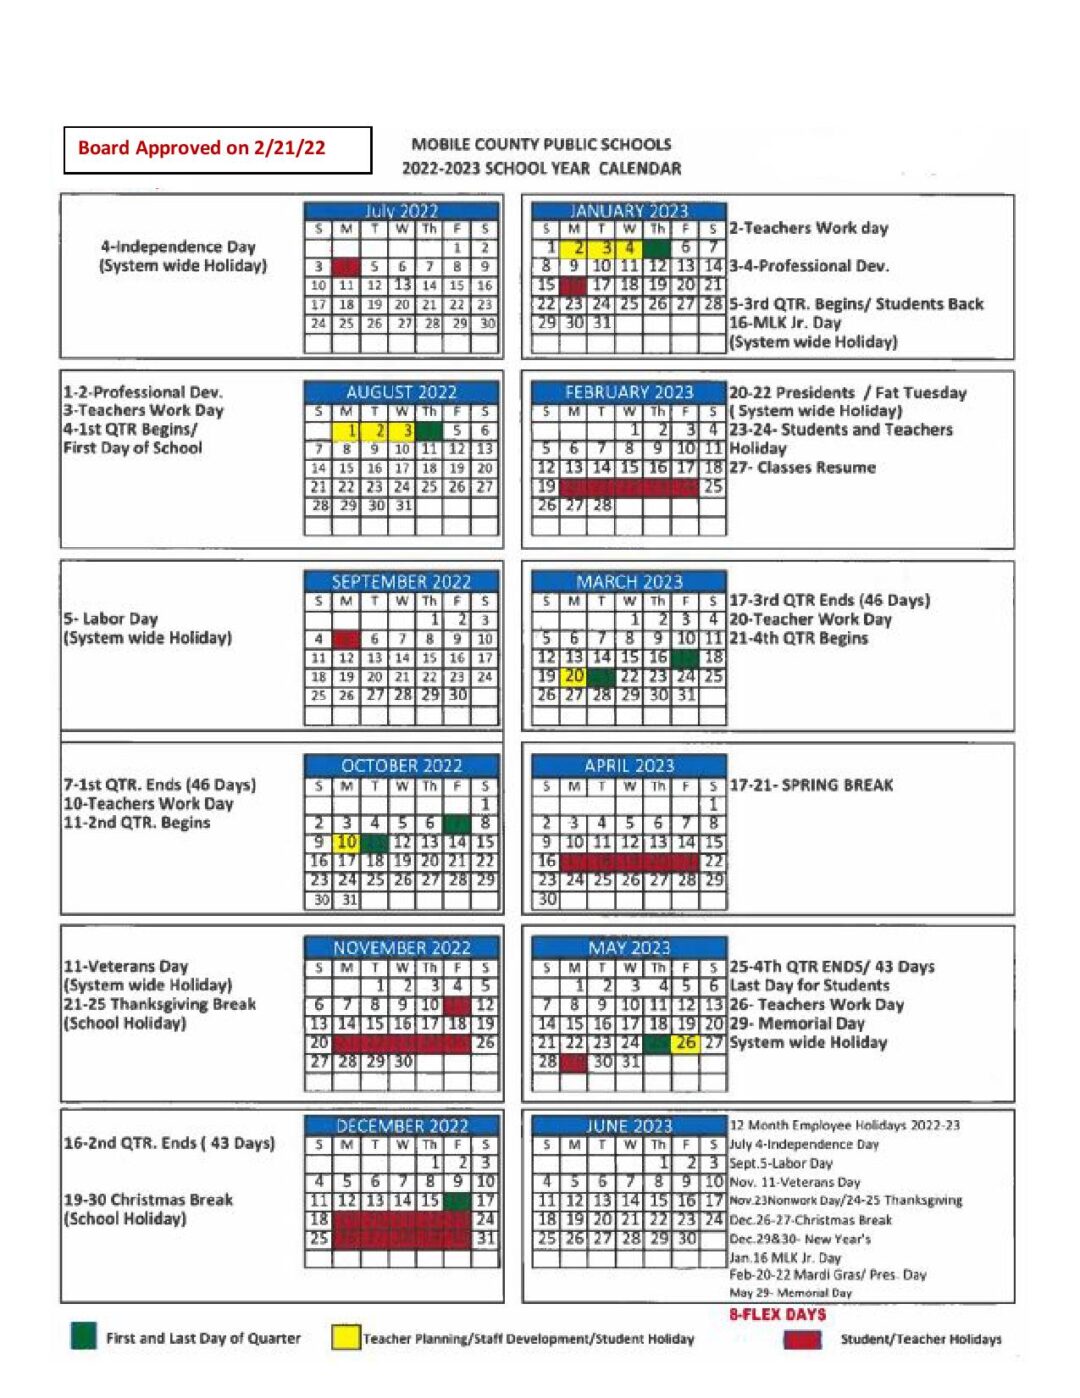 Mobile County Public Schools Calendar 2022-2023